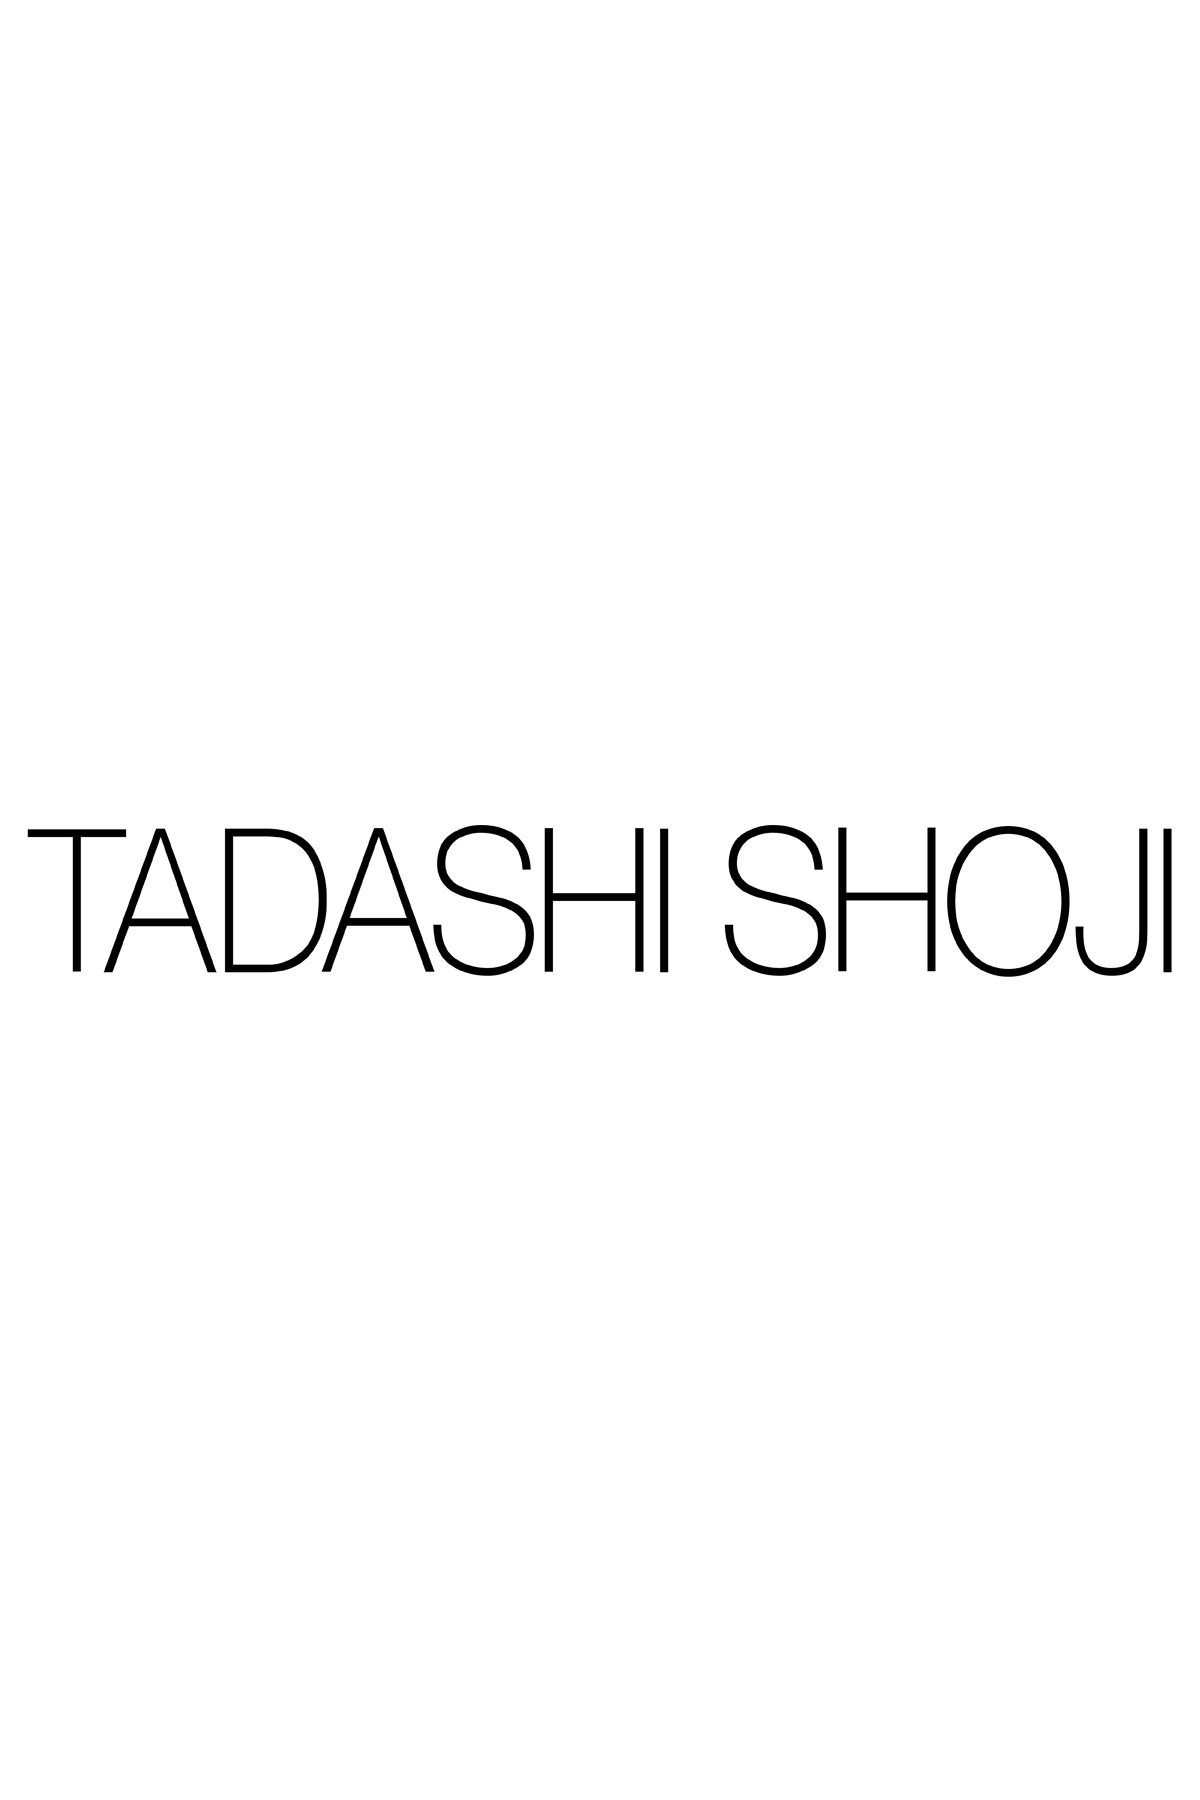 www.tadashishoji.com